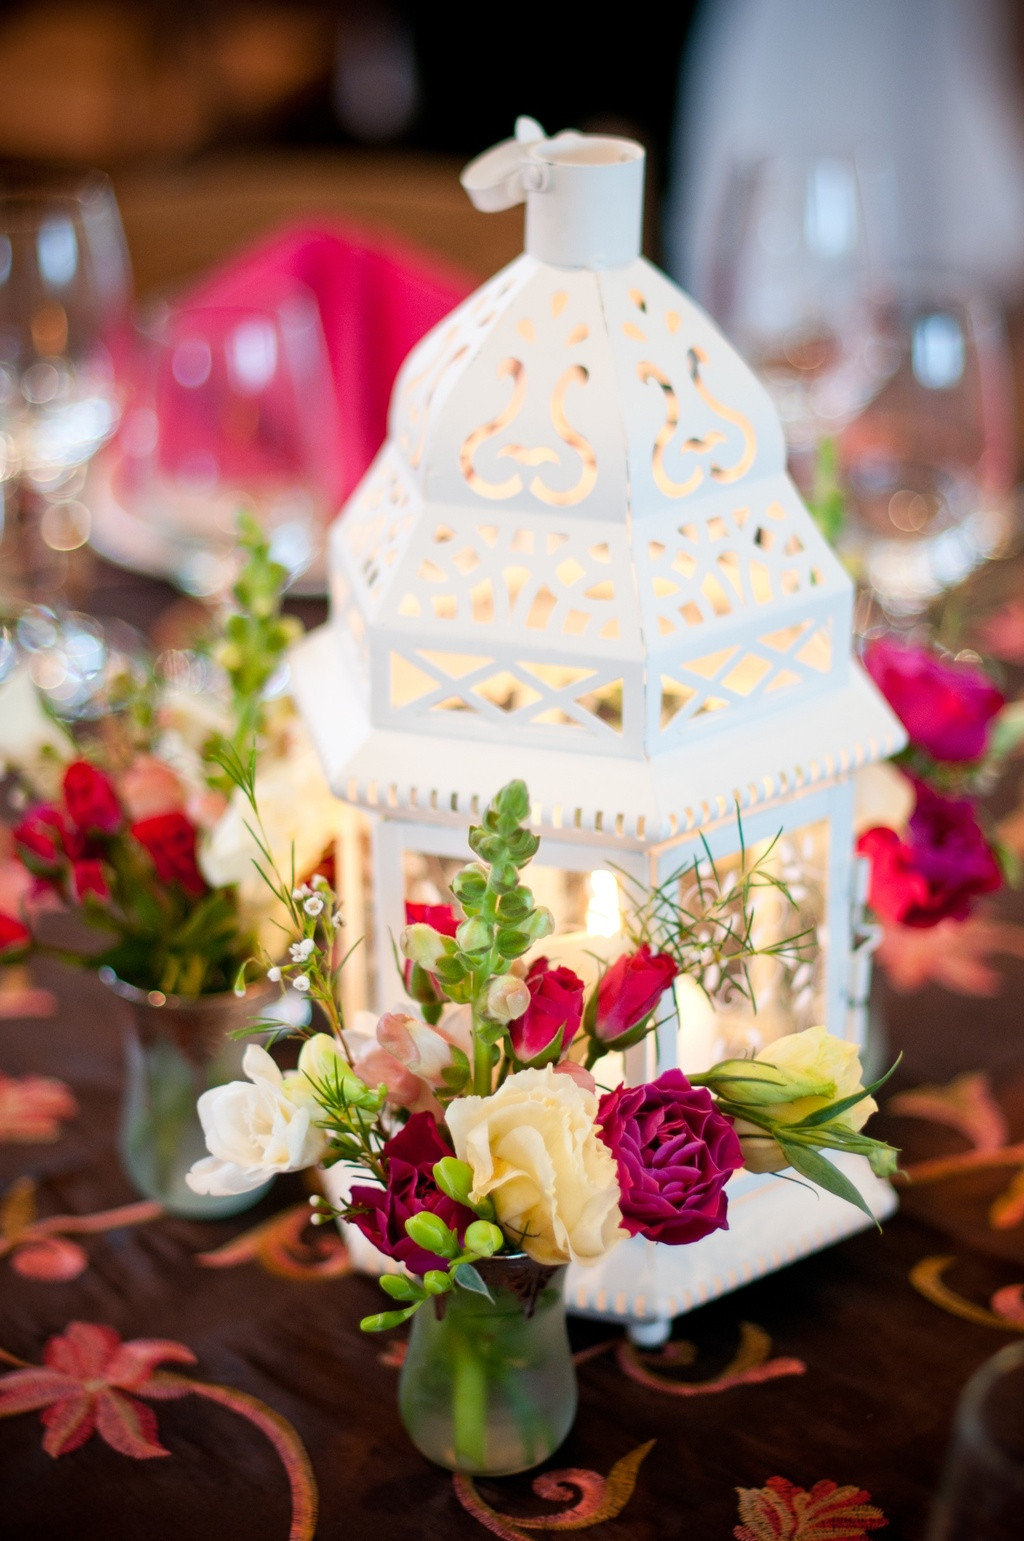 DIY Flower Centerpieces For Weddings
 DIY wedding reception centerpiece with pink wedding